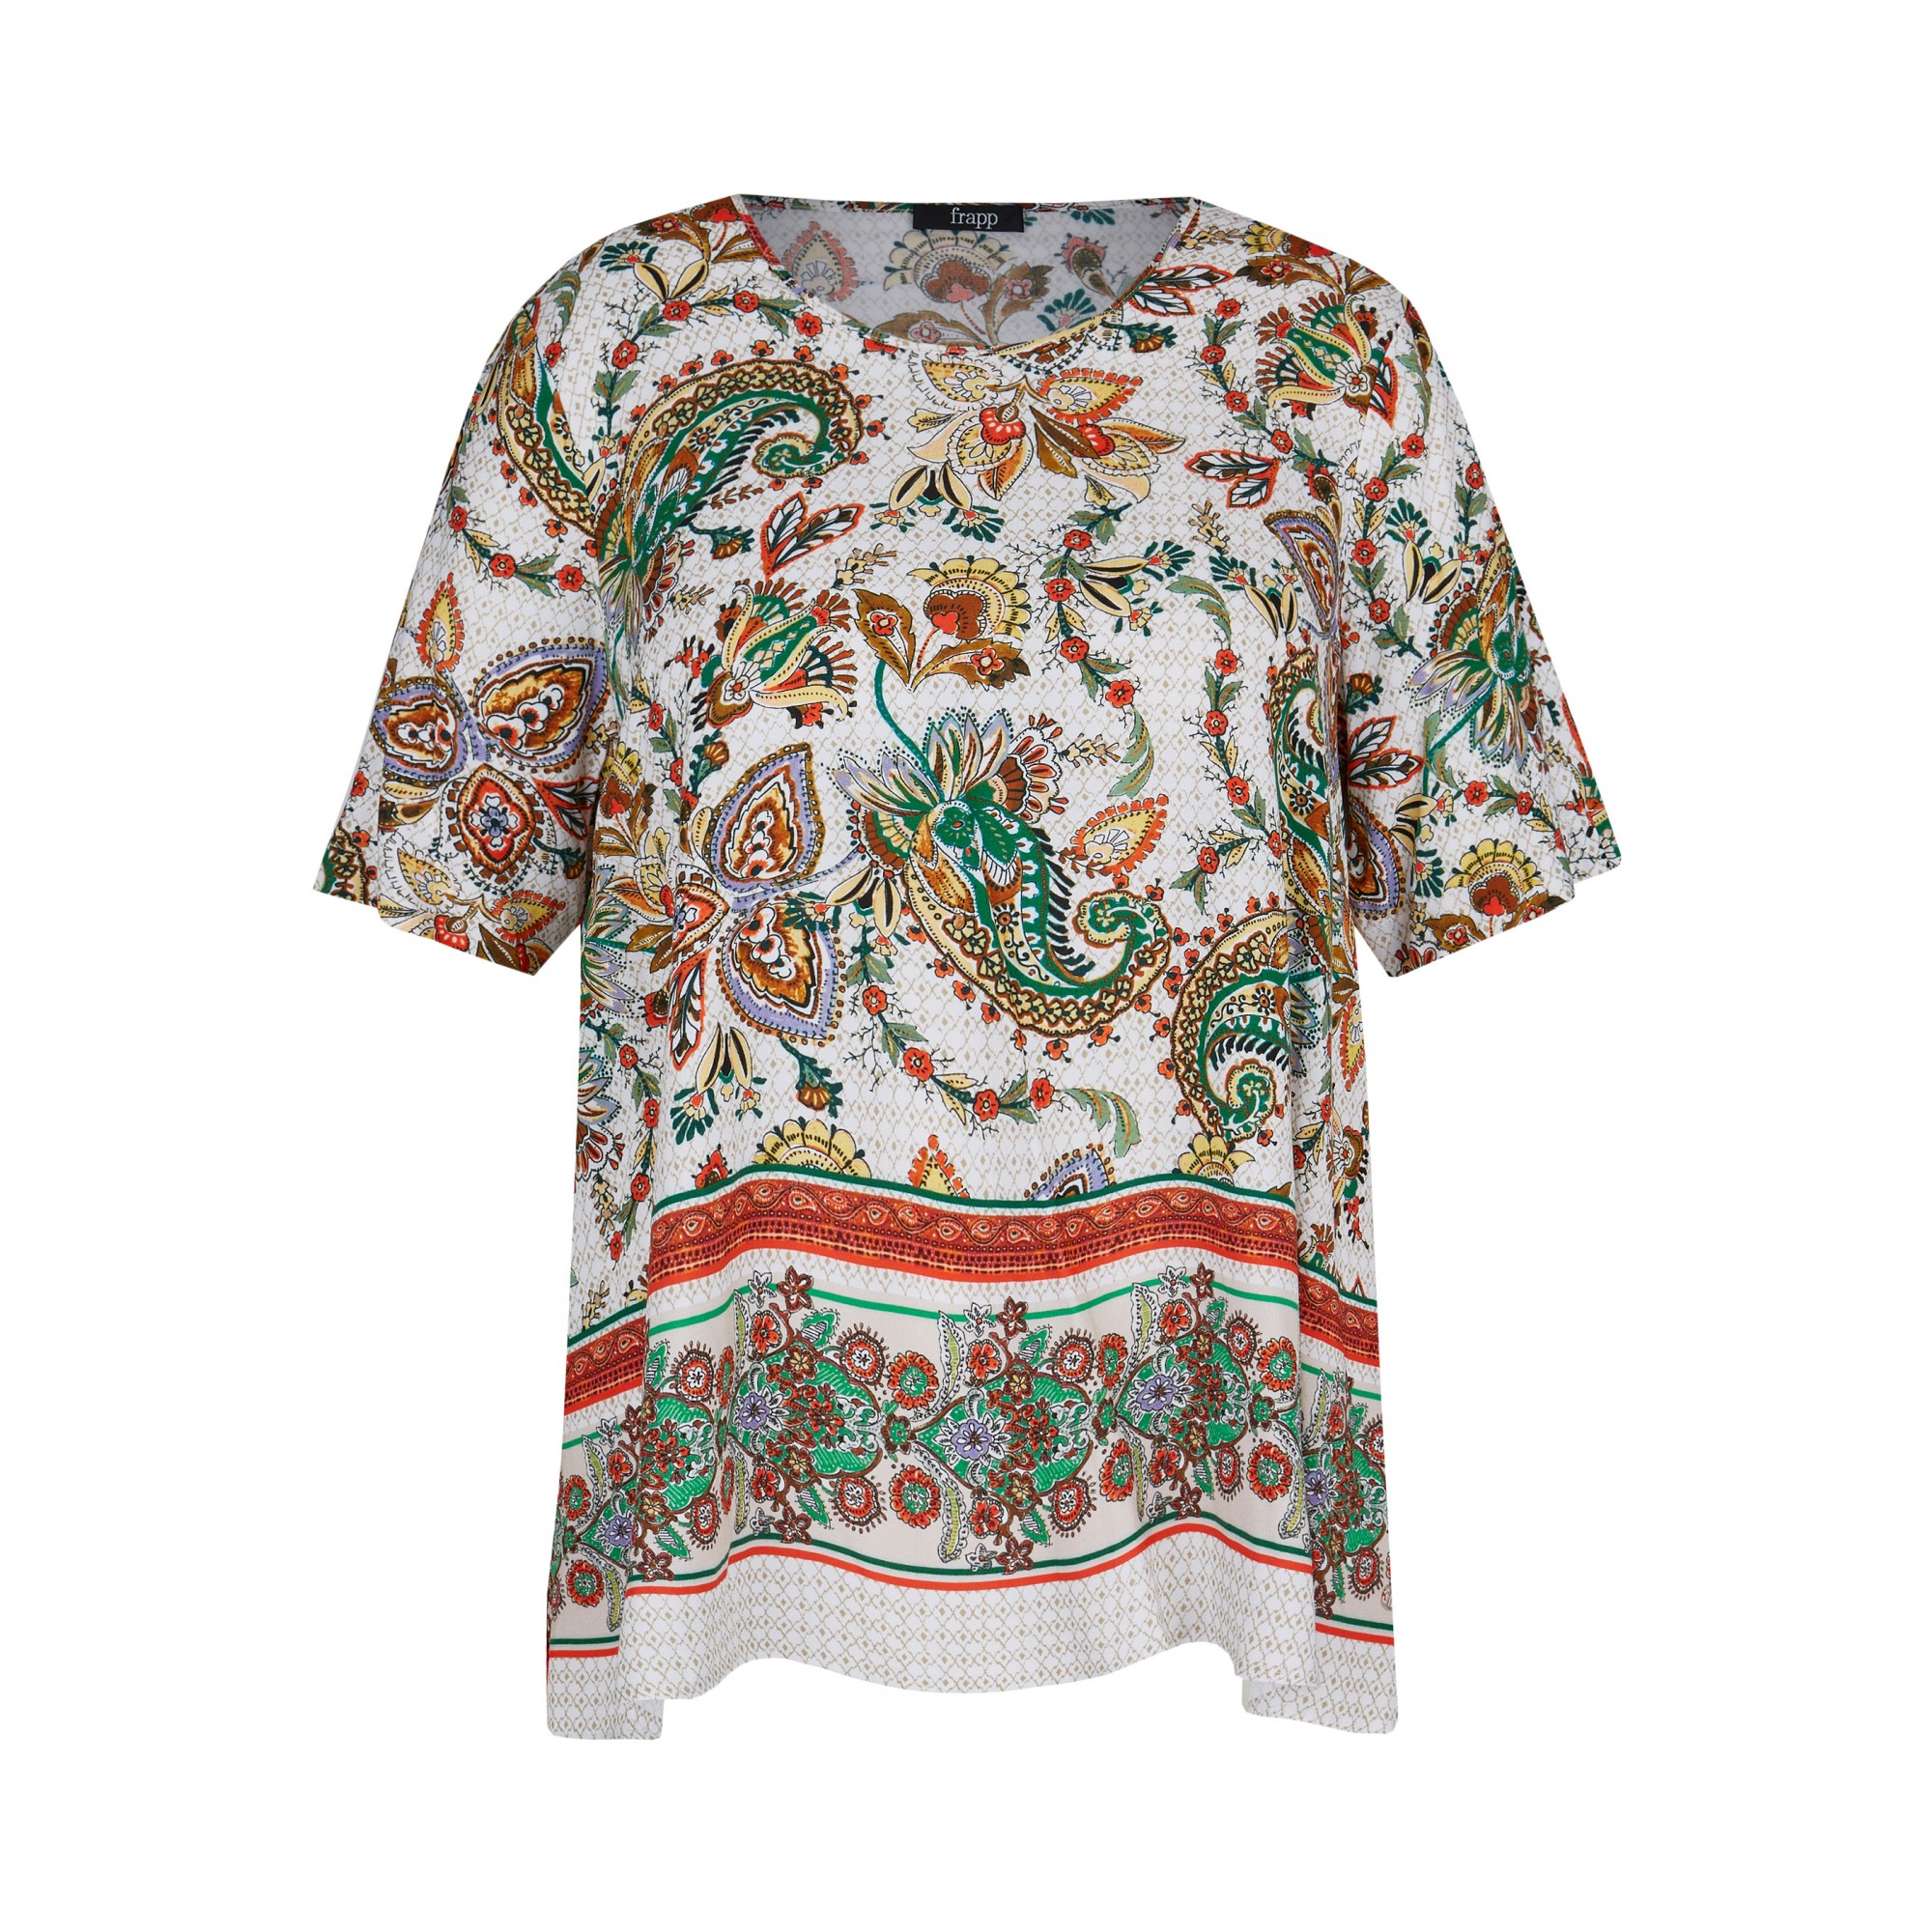 Fesche Shirtbluse mit Paisley-Muster